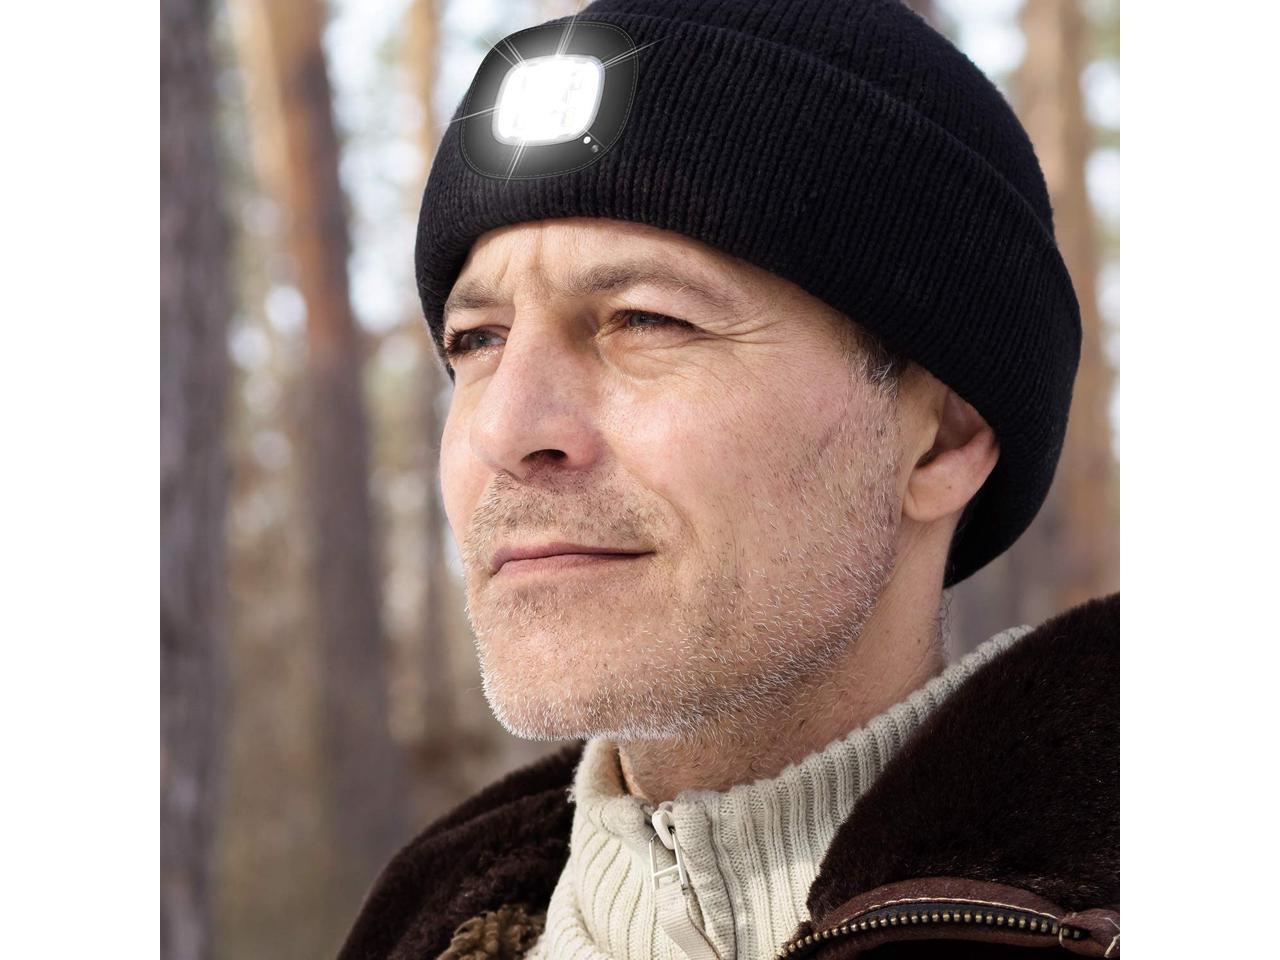 LED Light Beanie Winter Ski Hat Skull Cap Rechargeable USB Knit Cap Headlamp US 